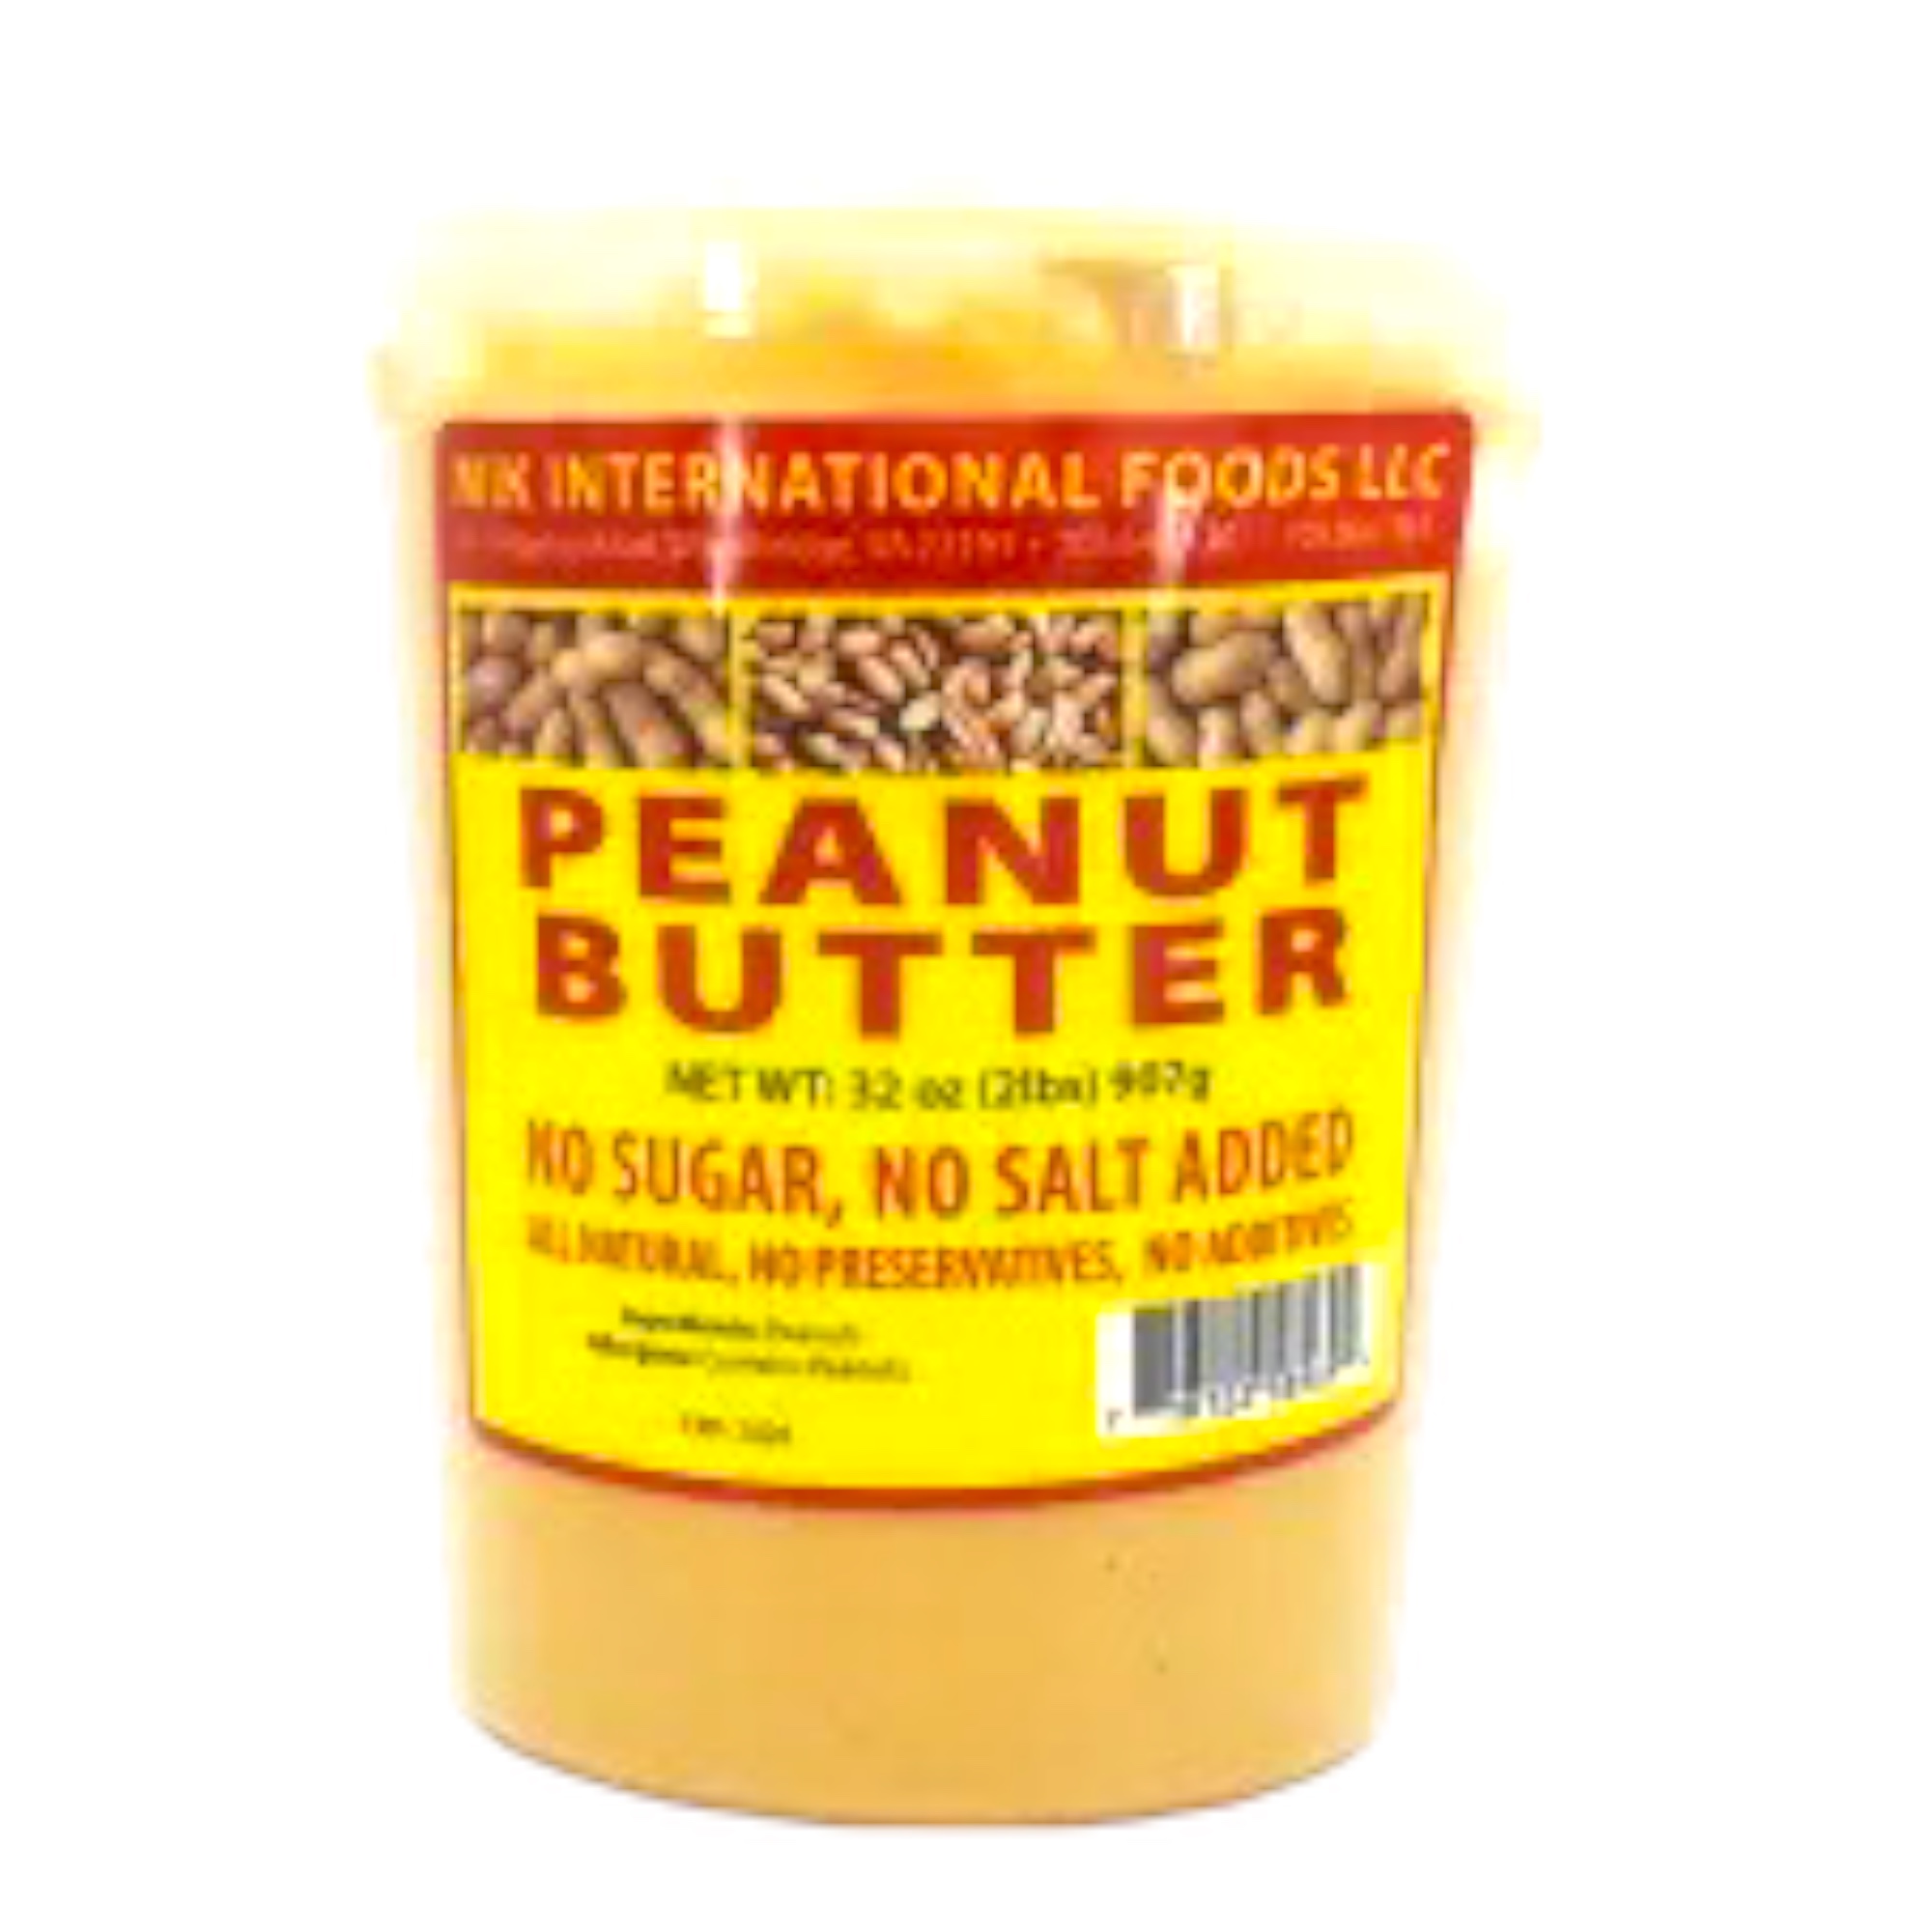 MIK Peanut Butter 32oz